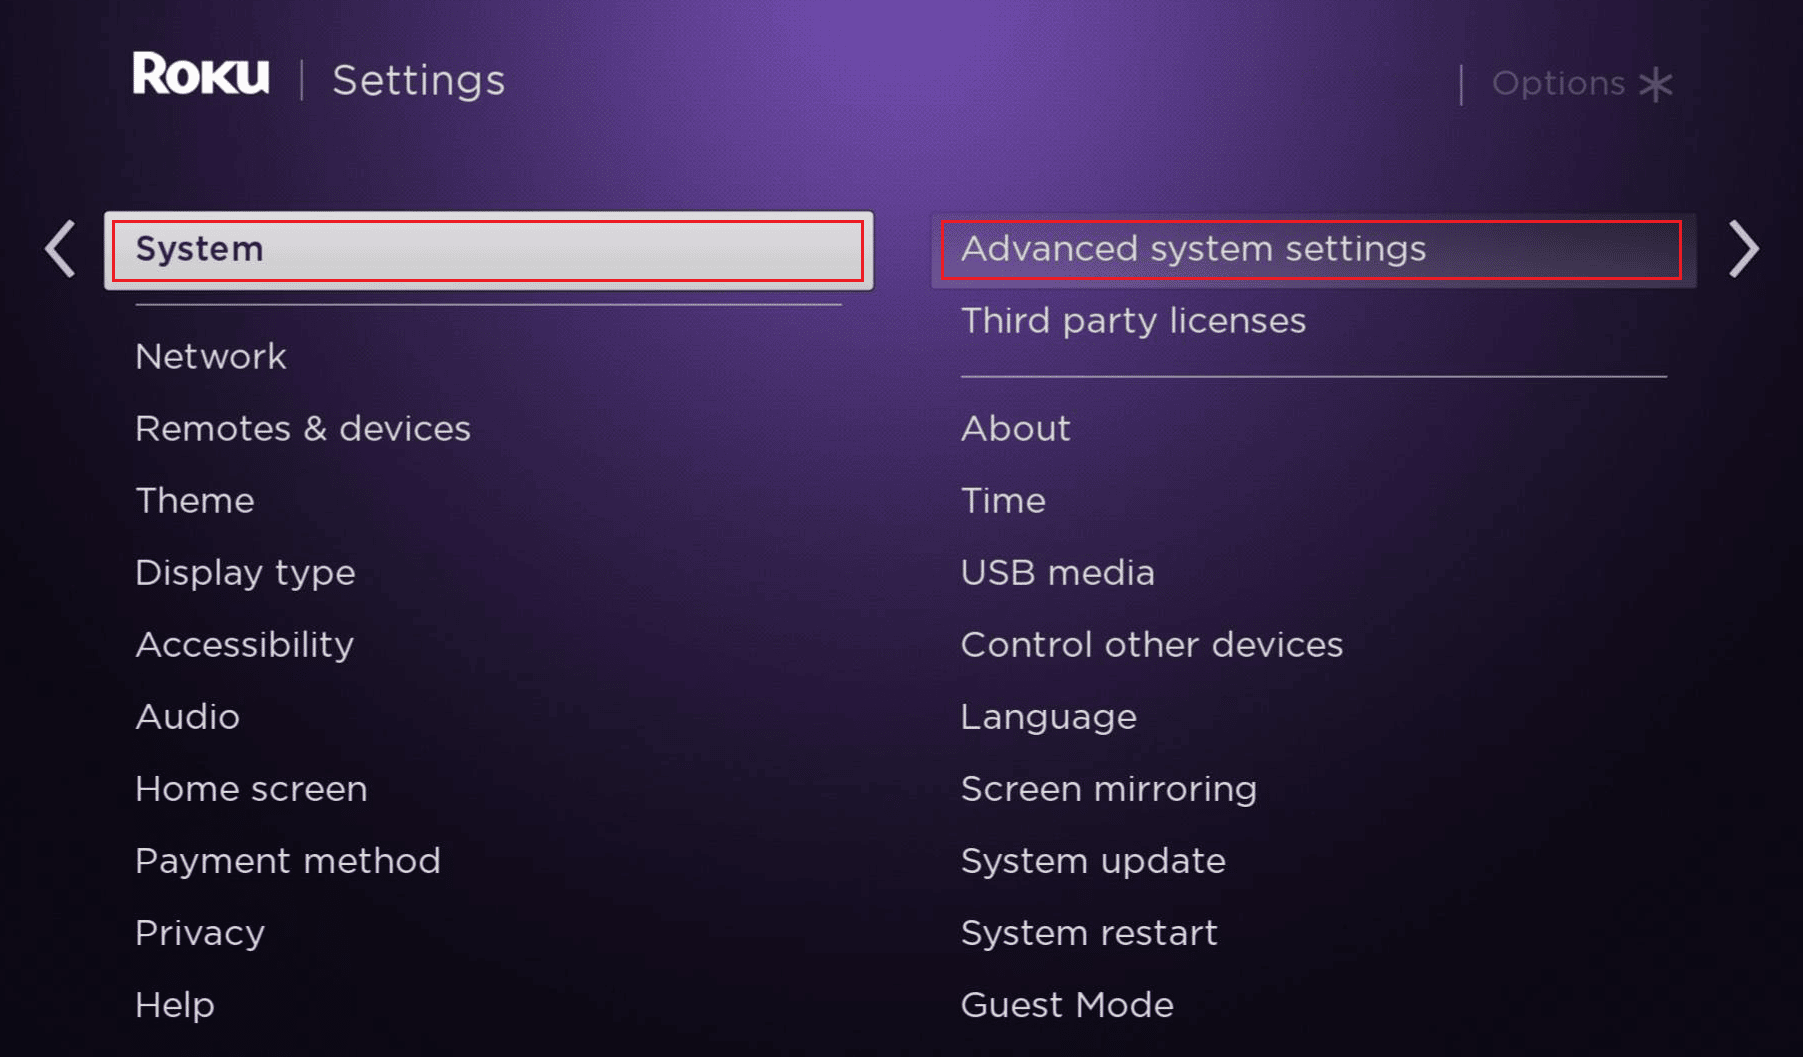 Choose Settings - System - Advanced system settings